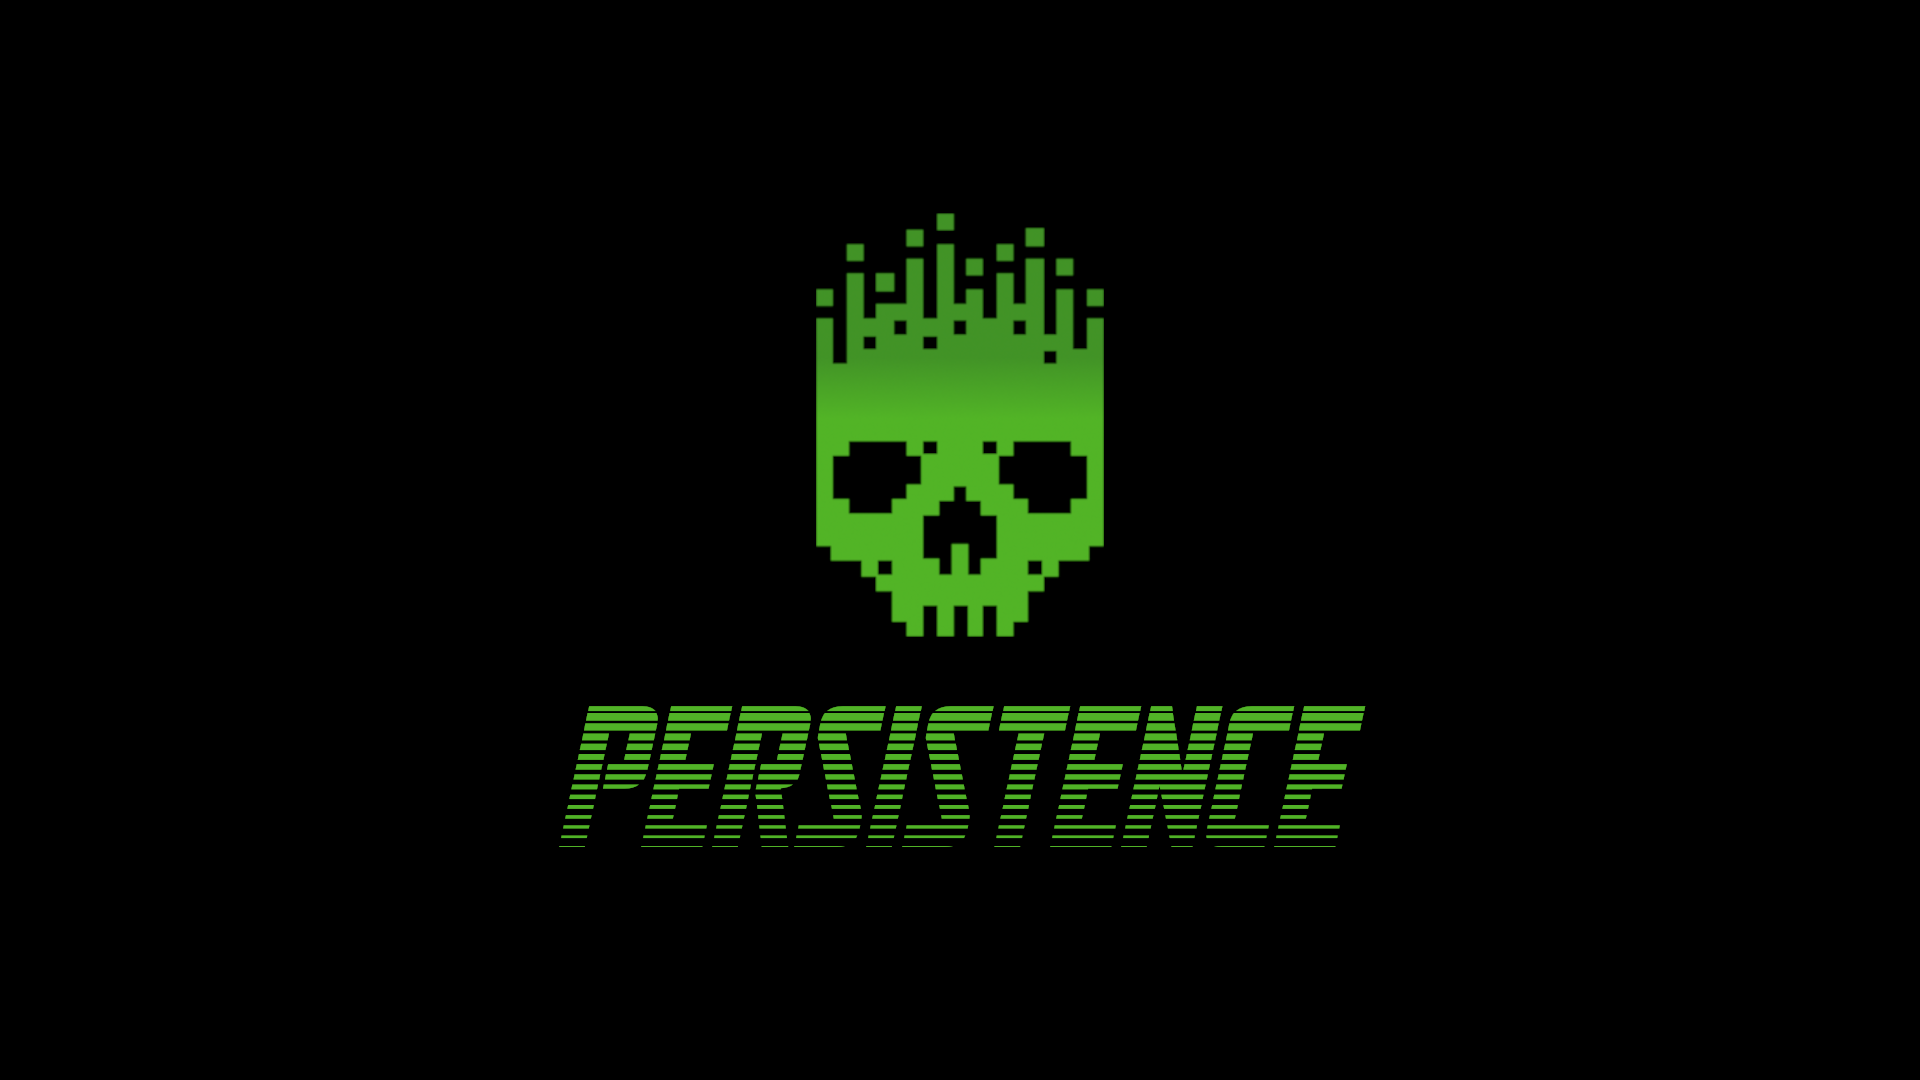 Dark motivational text minimalism green hackers pixels skull